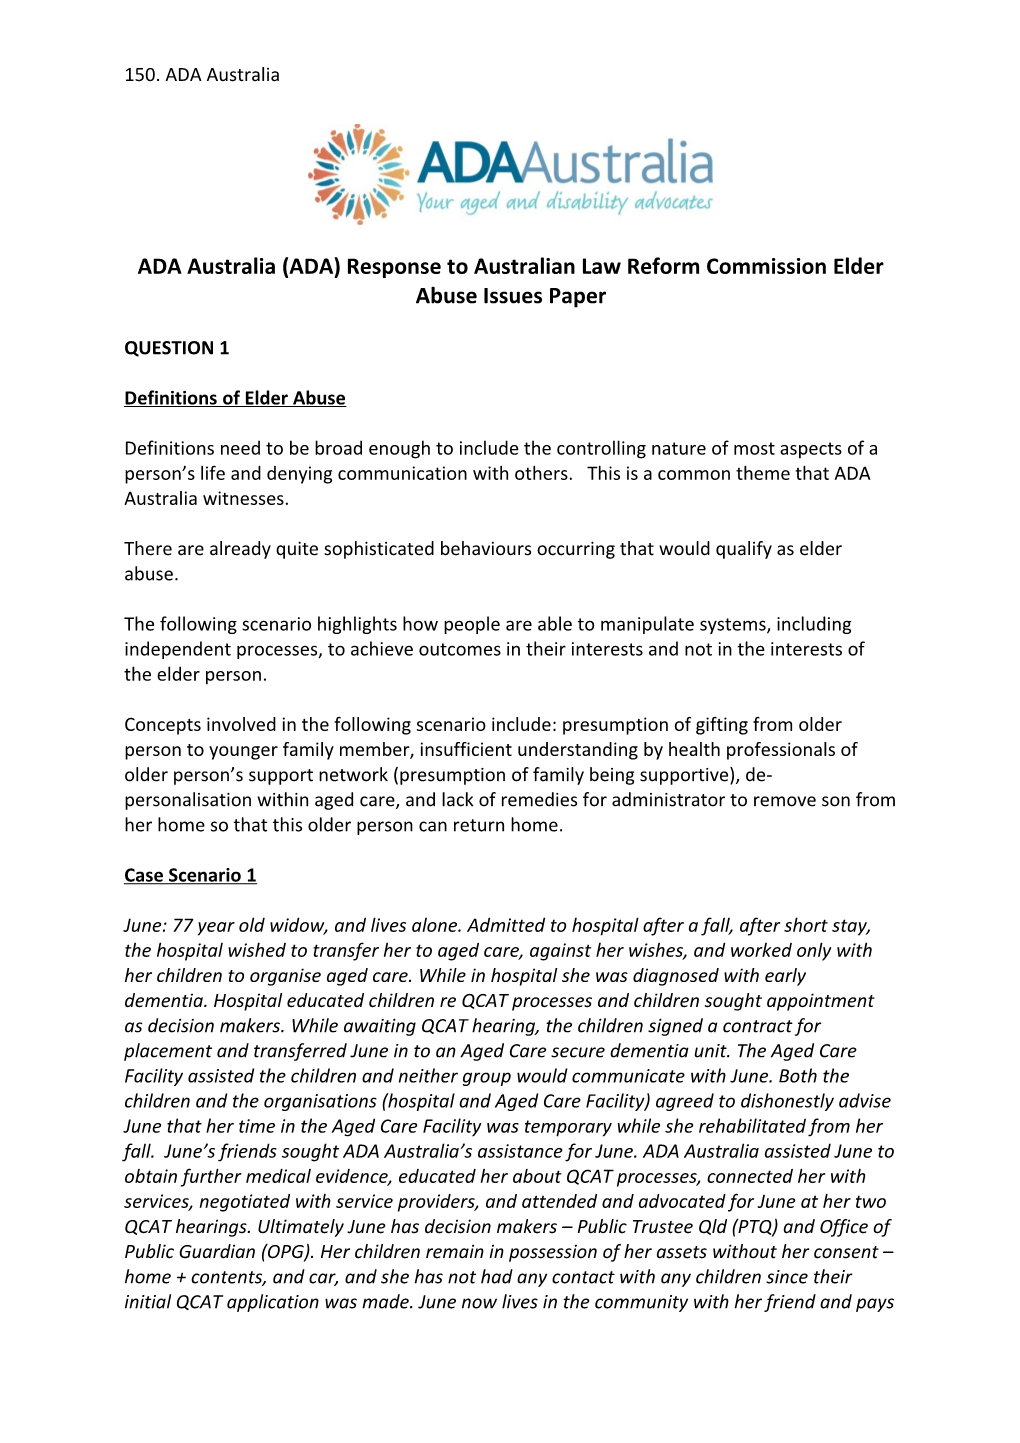 ADA Australia (ADA) Response to Australian Law Reform Commission Elder Abuse Issues Paper